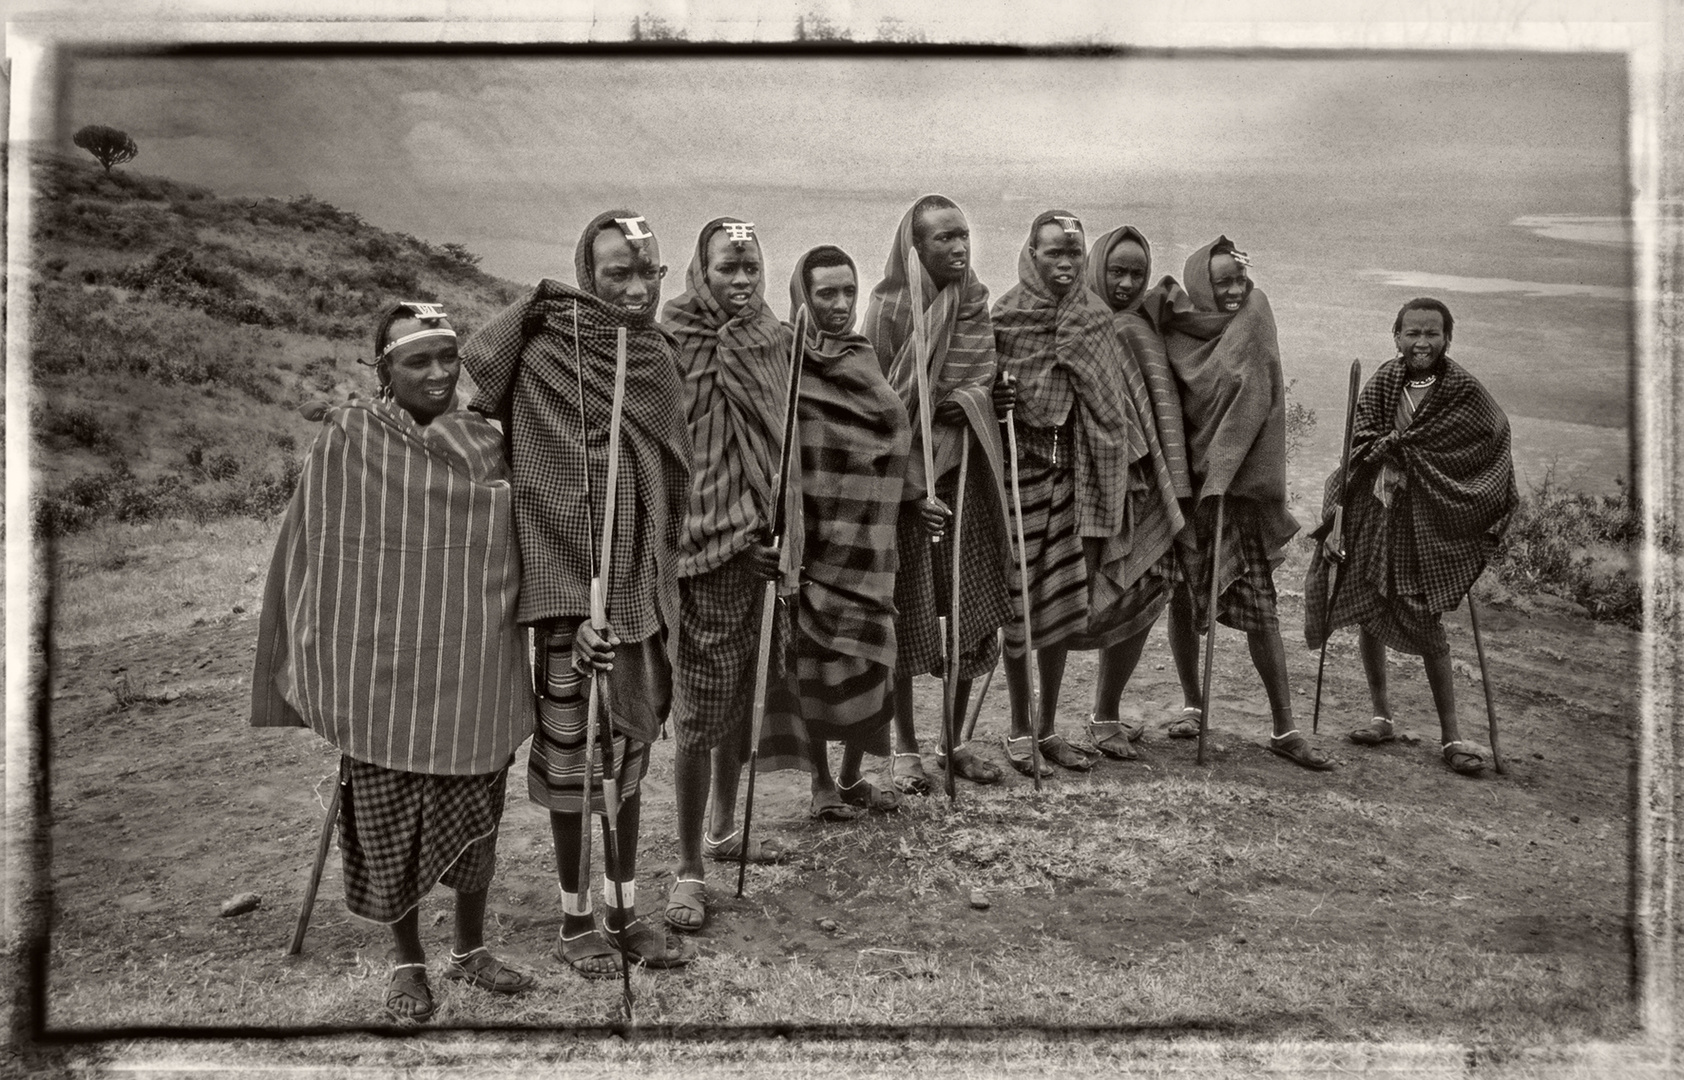 Gruppenfoto in Afrika